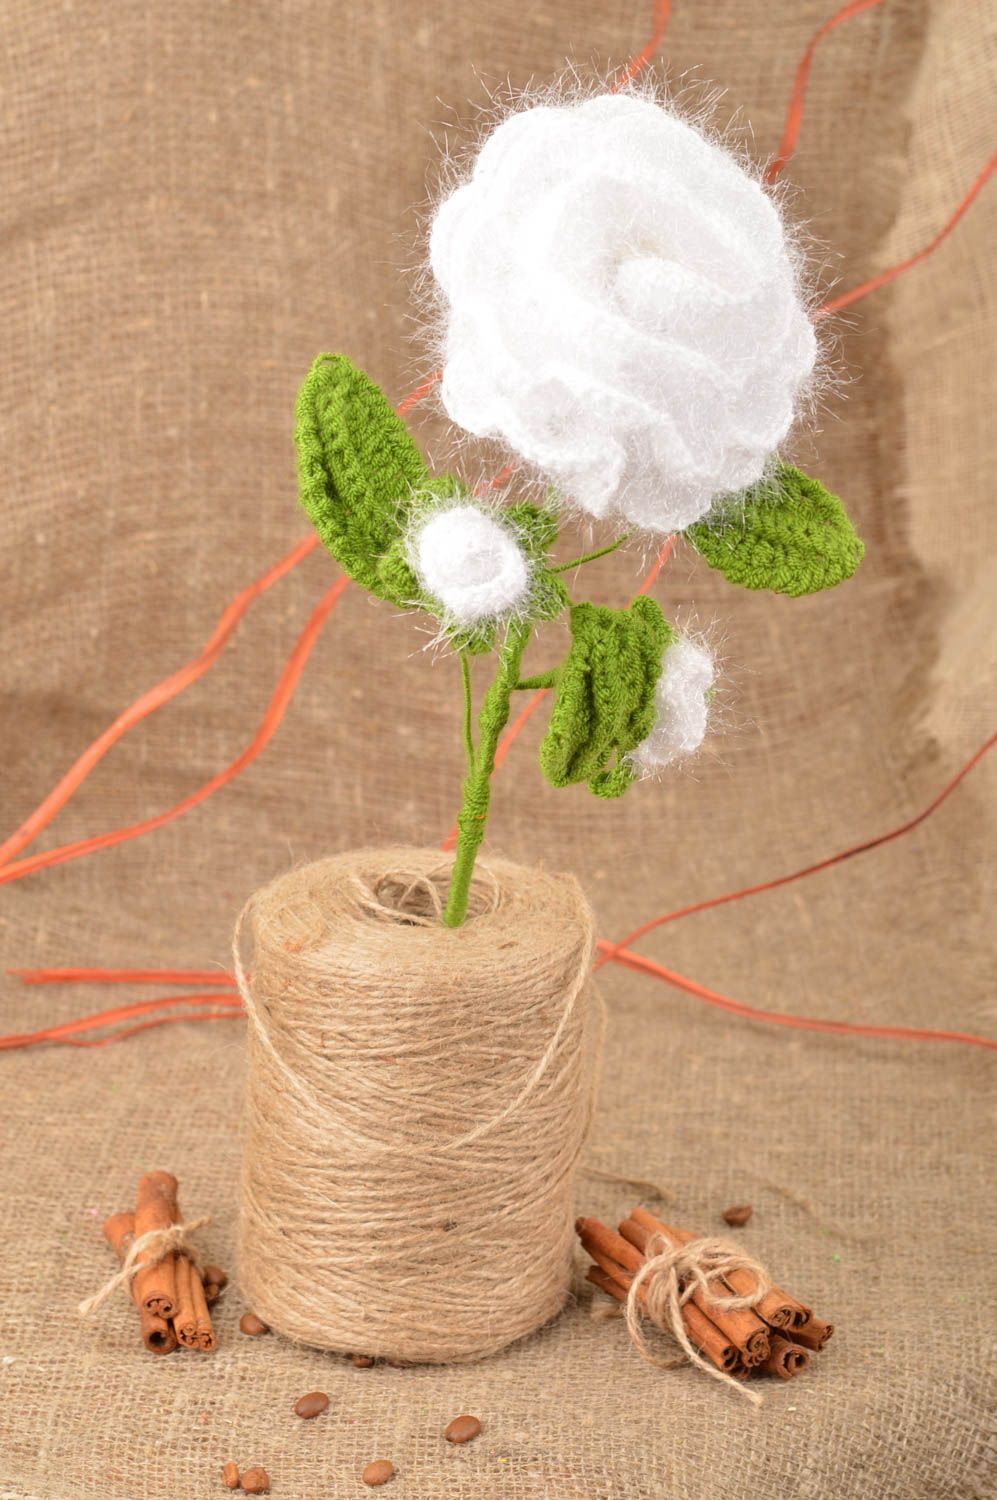 Artificial crocheted acrylic flower for home decor White Rose handmade ideas photo 1